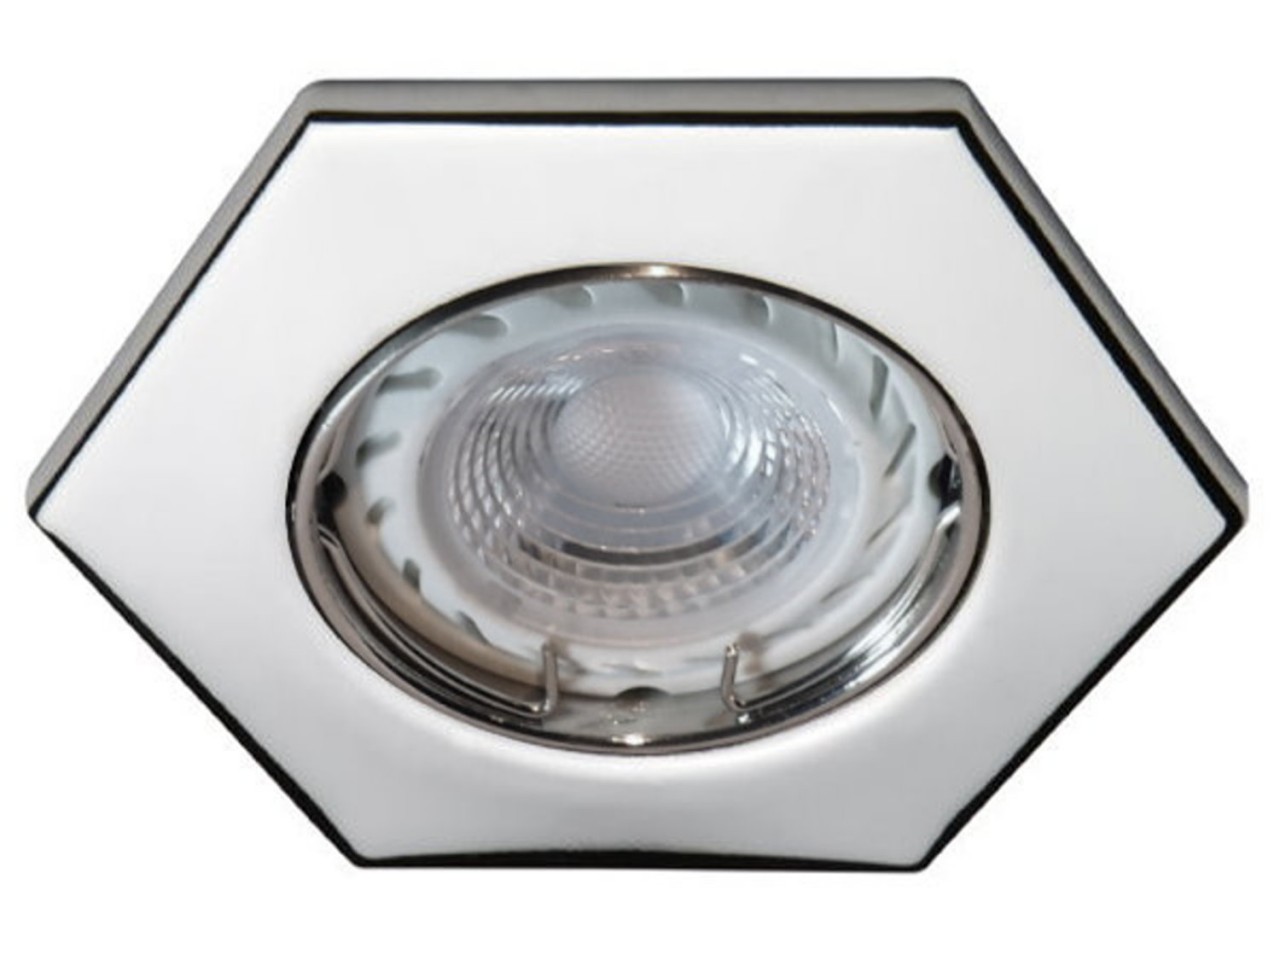 LED Einbaustrahler 6-Eck chrom glänzend 12 V - 3 W (PA) neutralweiss von C-Light GmbH